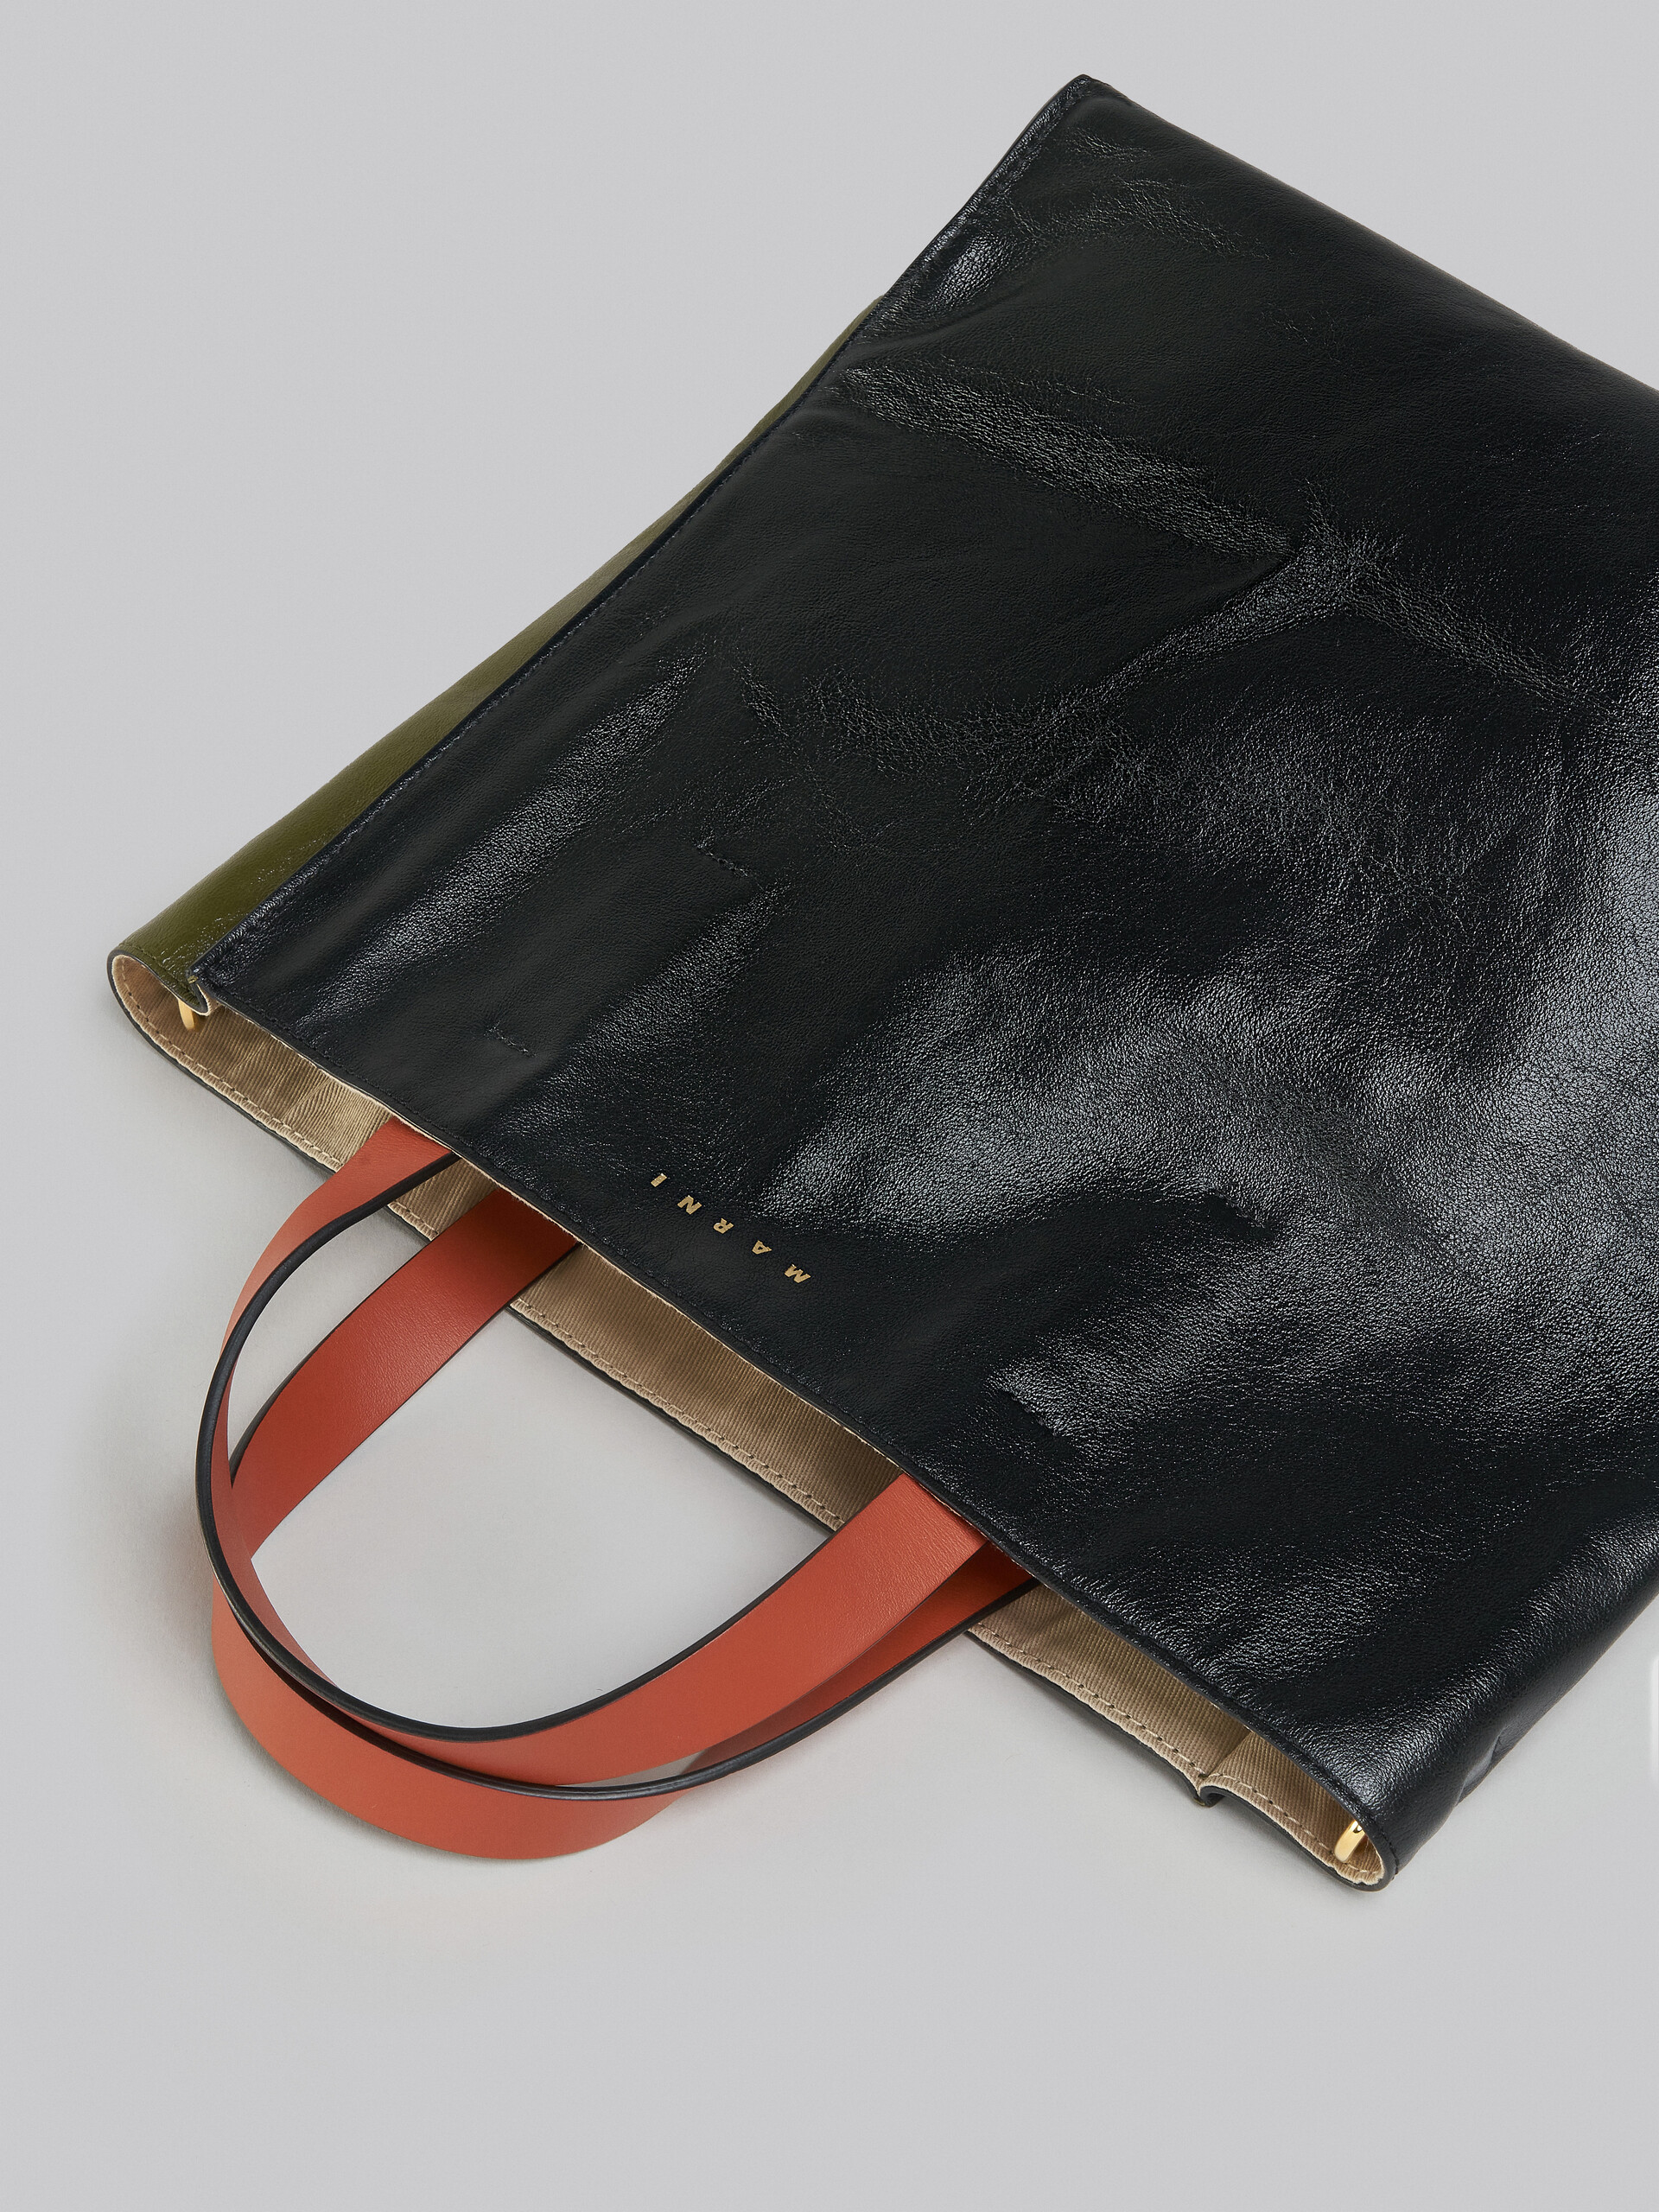 Black green orange tumbled leather MUSEO SOFT bag - Shopping Bags - Image 5